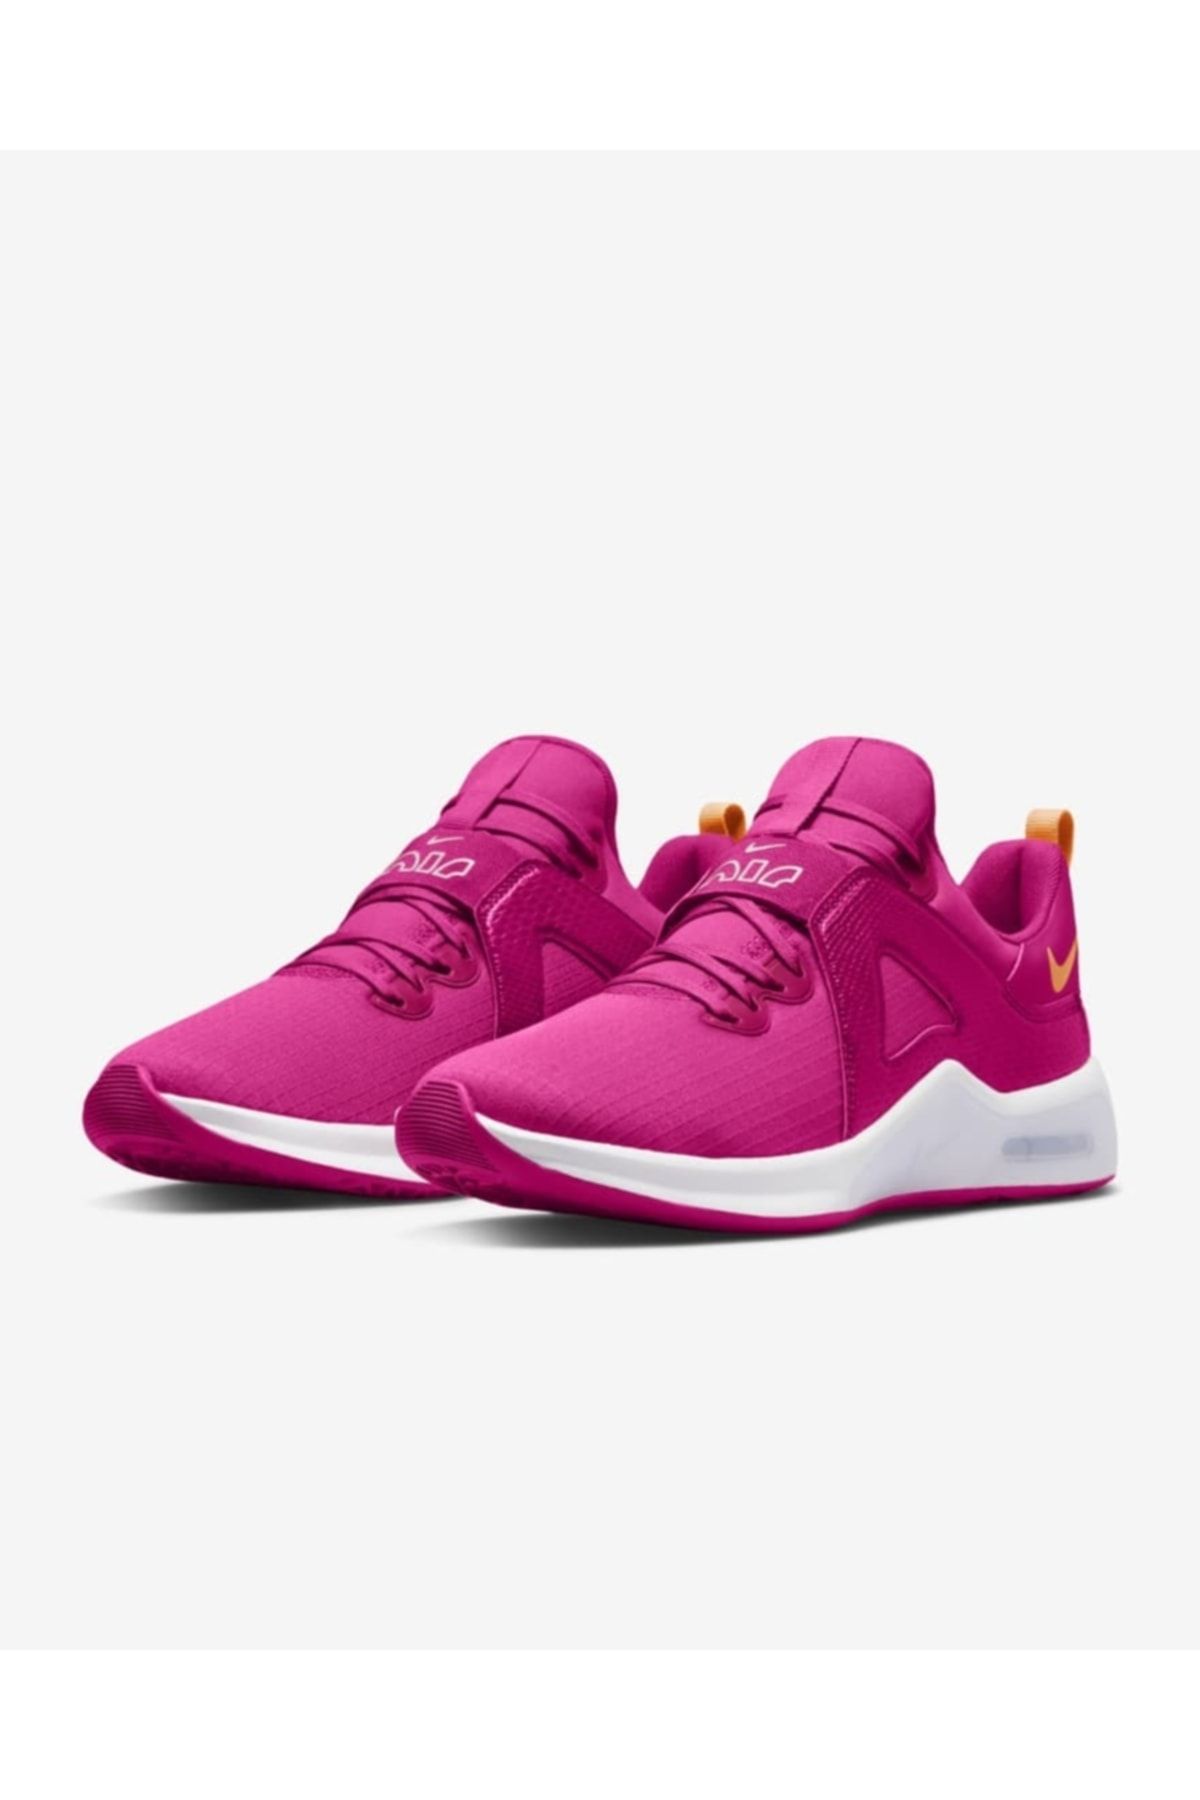 Nike Air Max Bella Tr 5 Pembe Renk Kadın Fitness Ayakkabısı